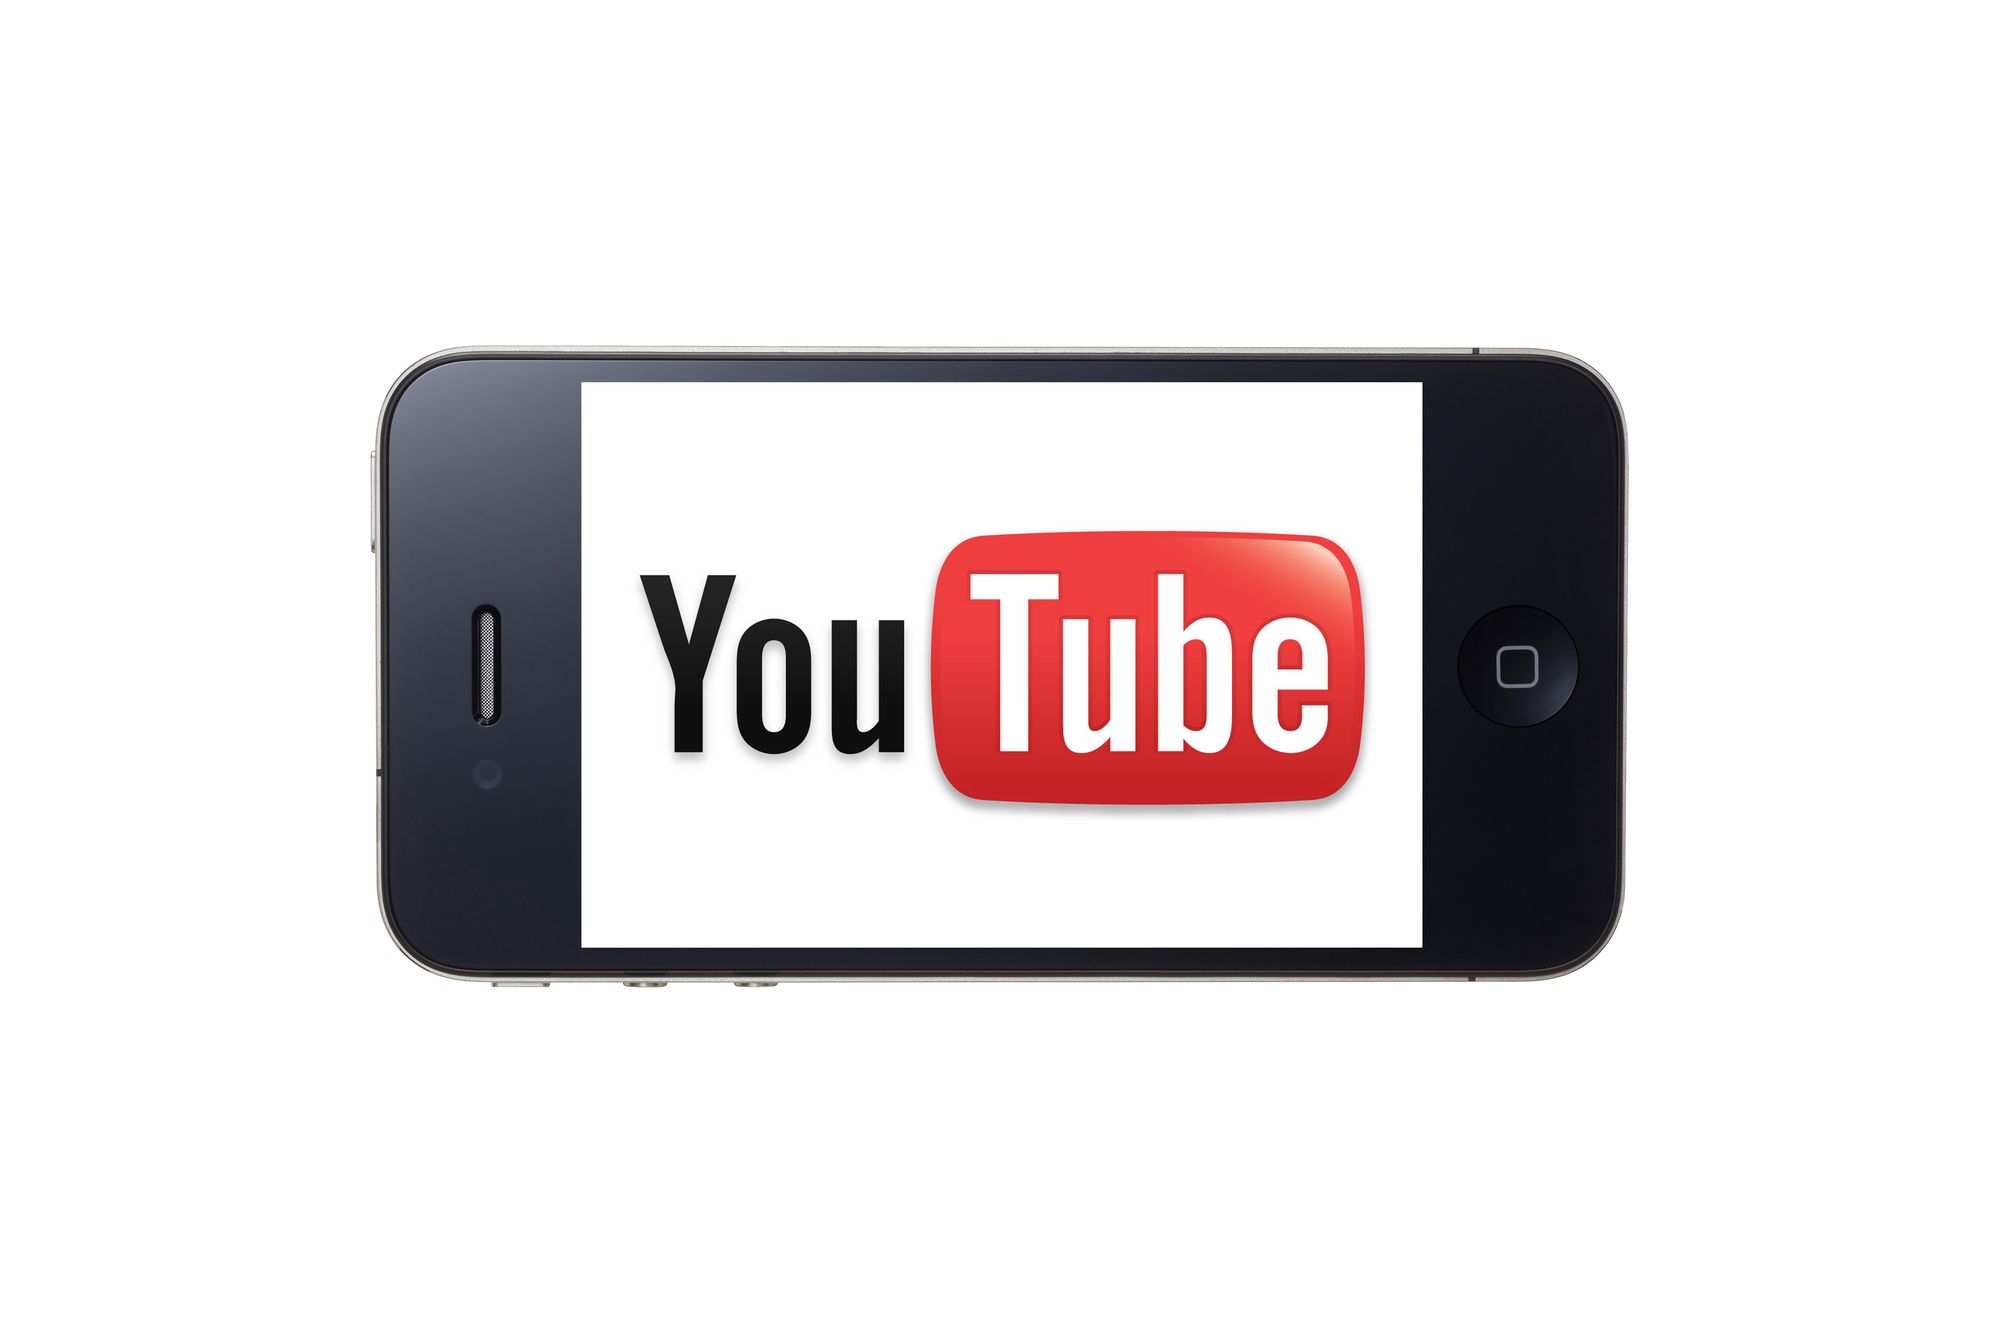 You Tube logo display on iPhone screen